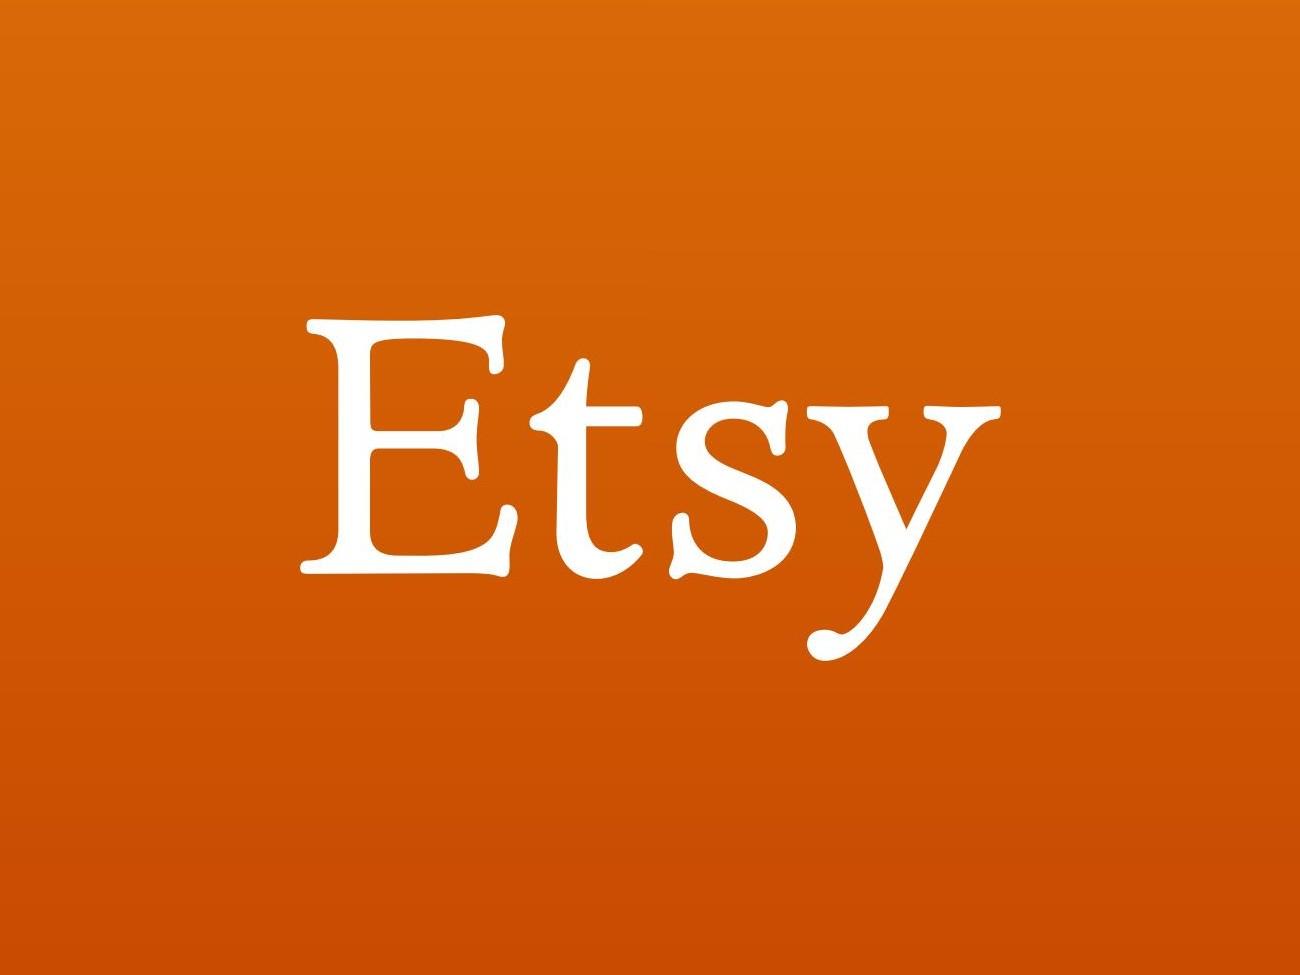 Etsy Official Logo - etsy-logo - The Rocky Mountain Collegian